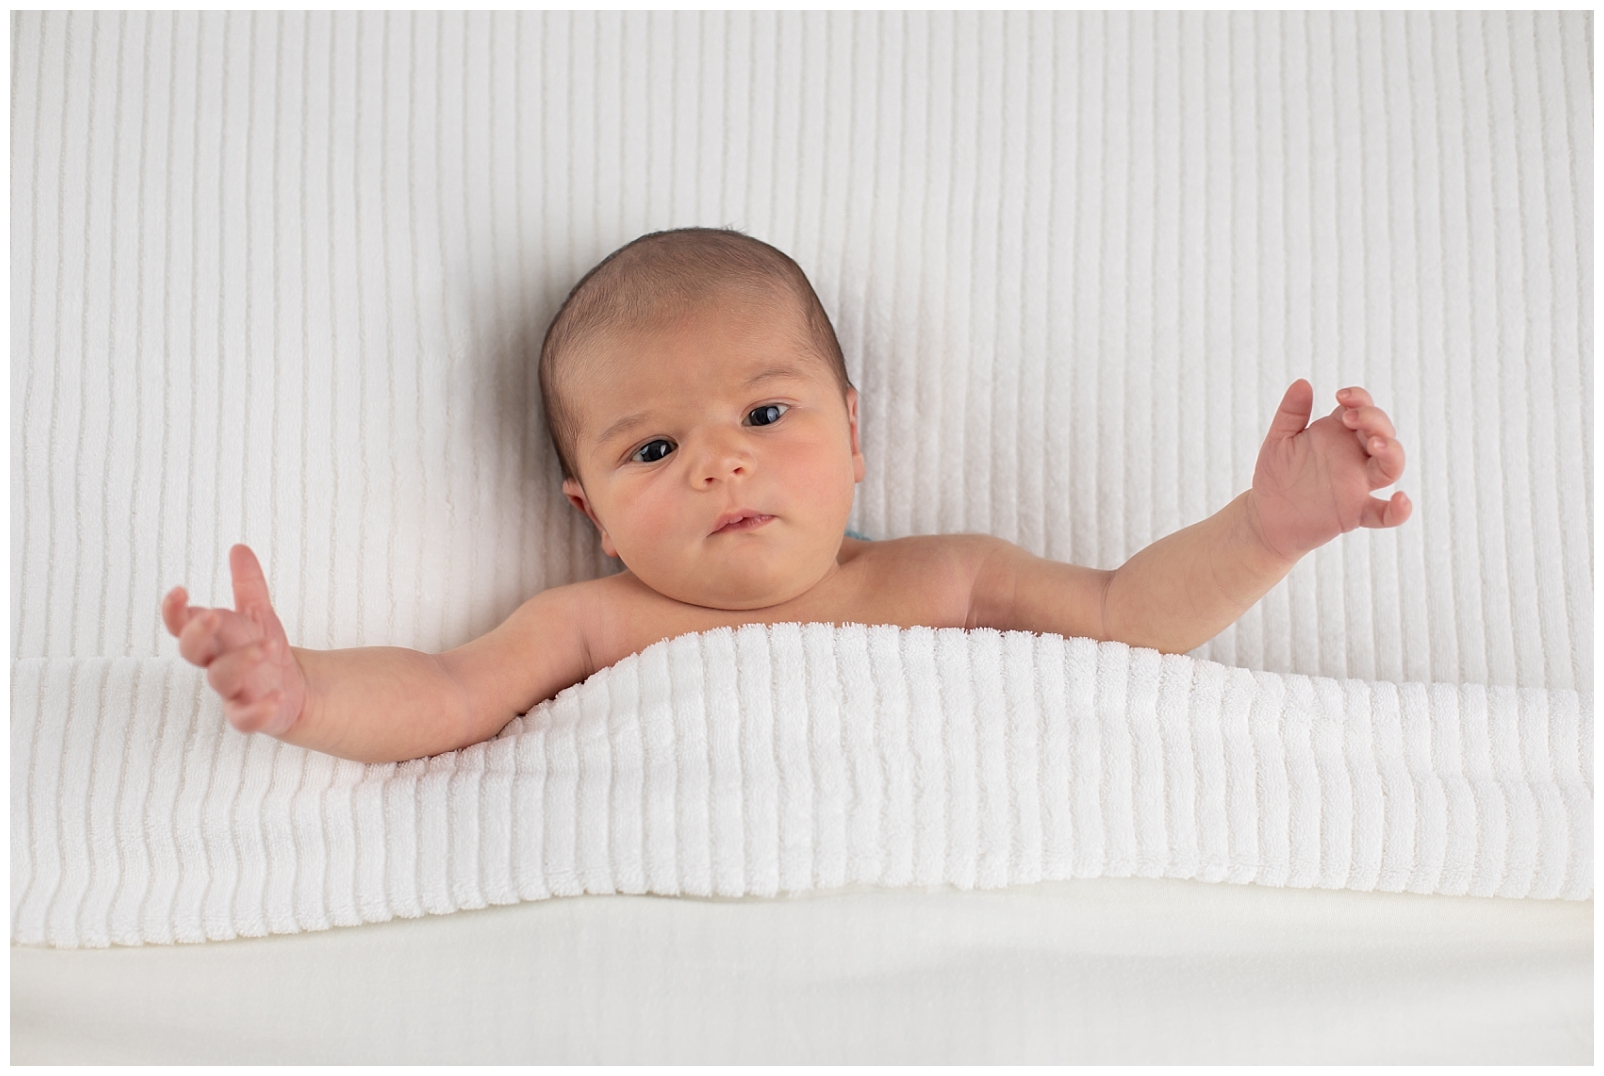 Newborn with striped blanket